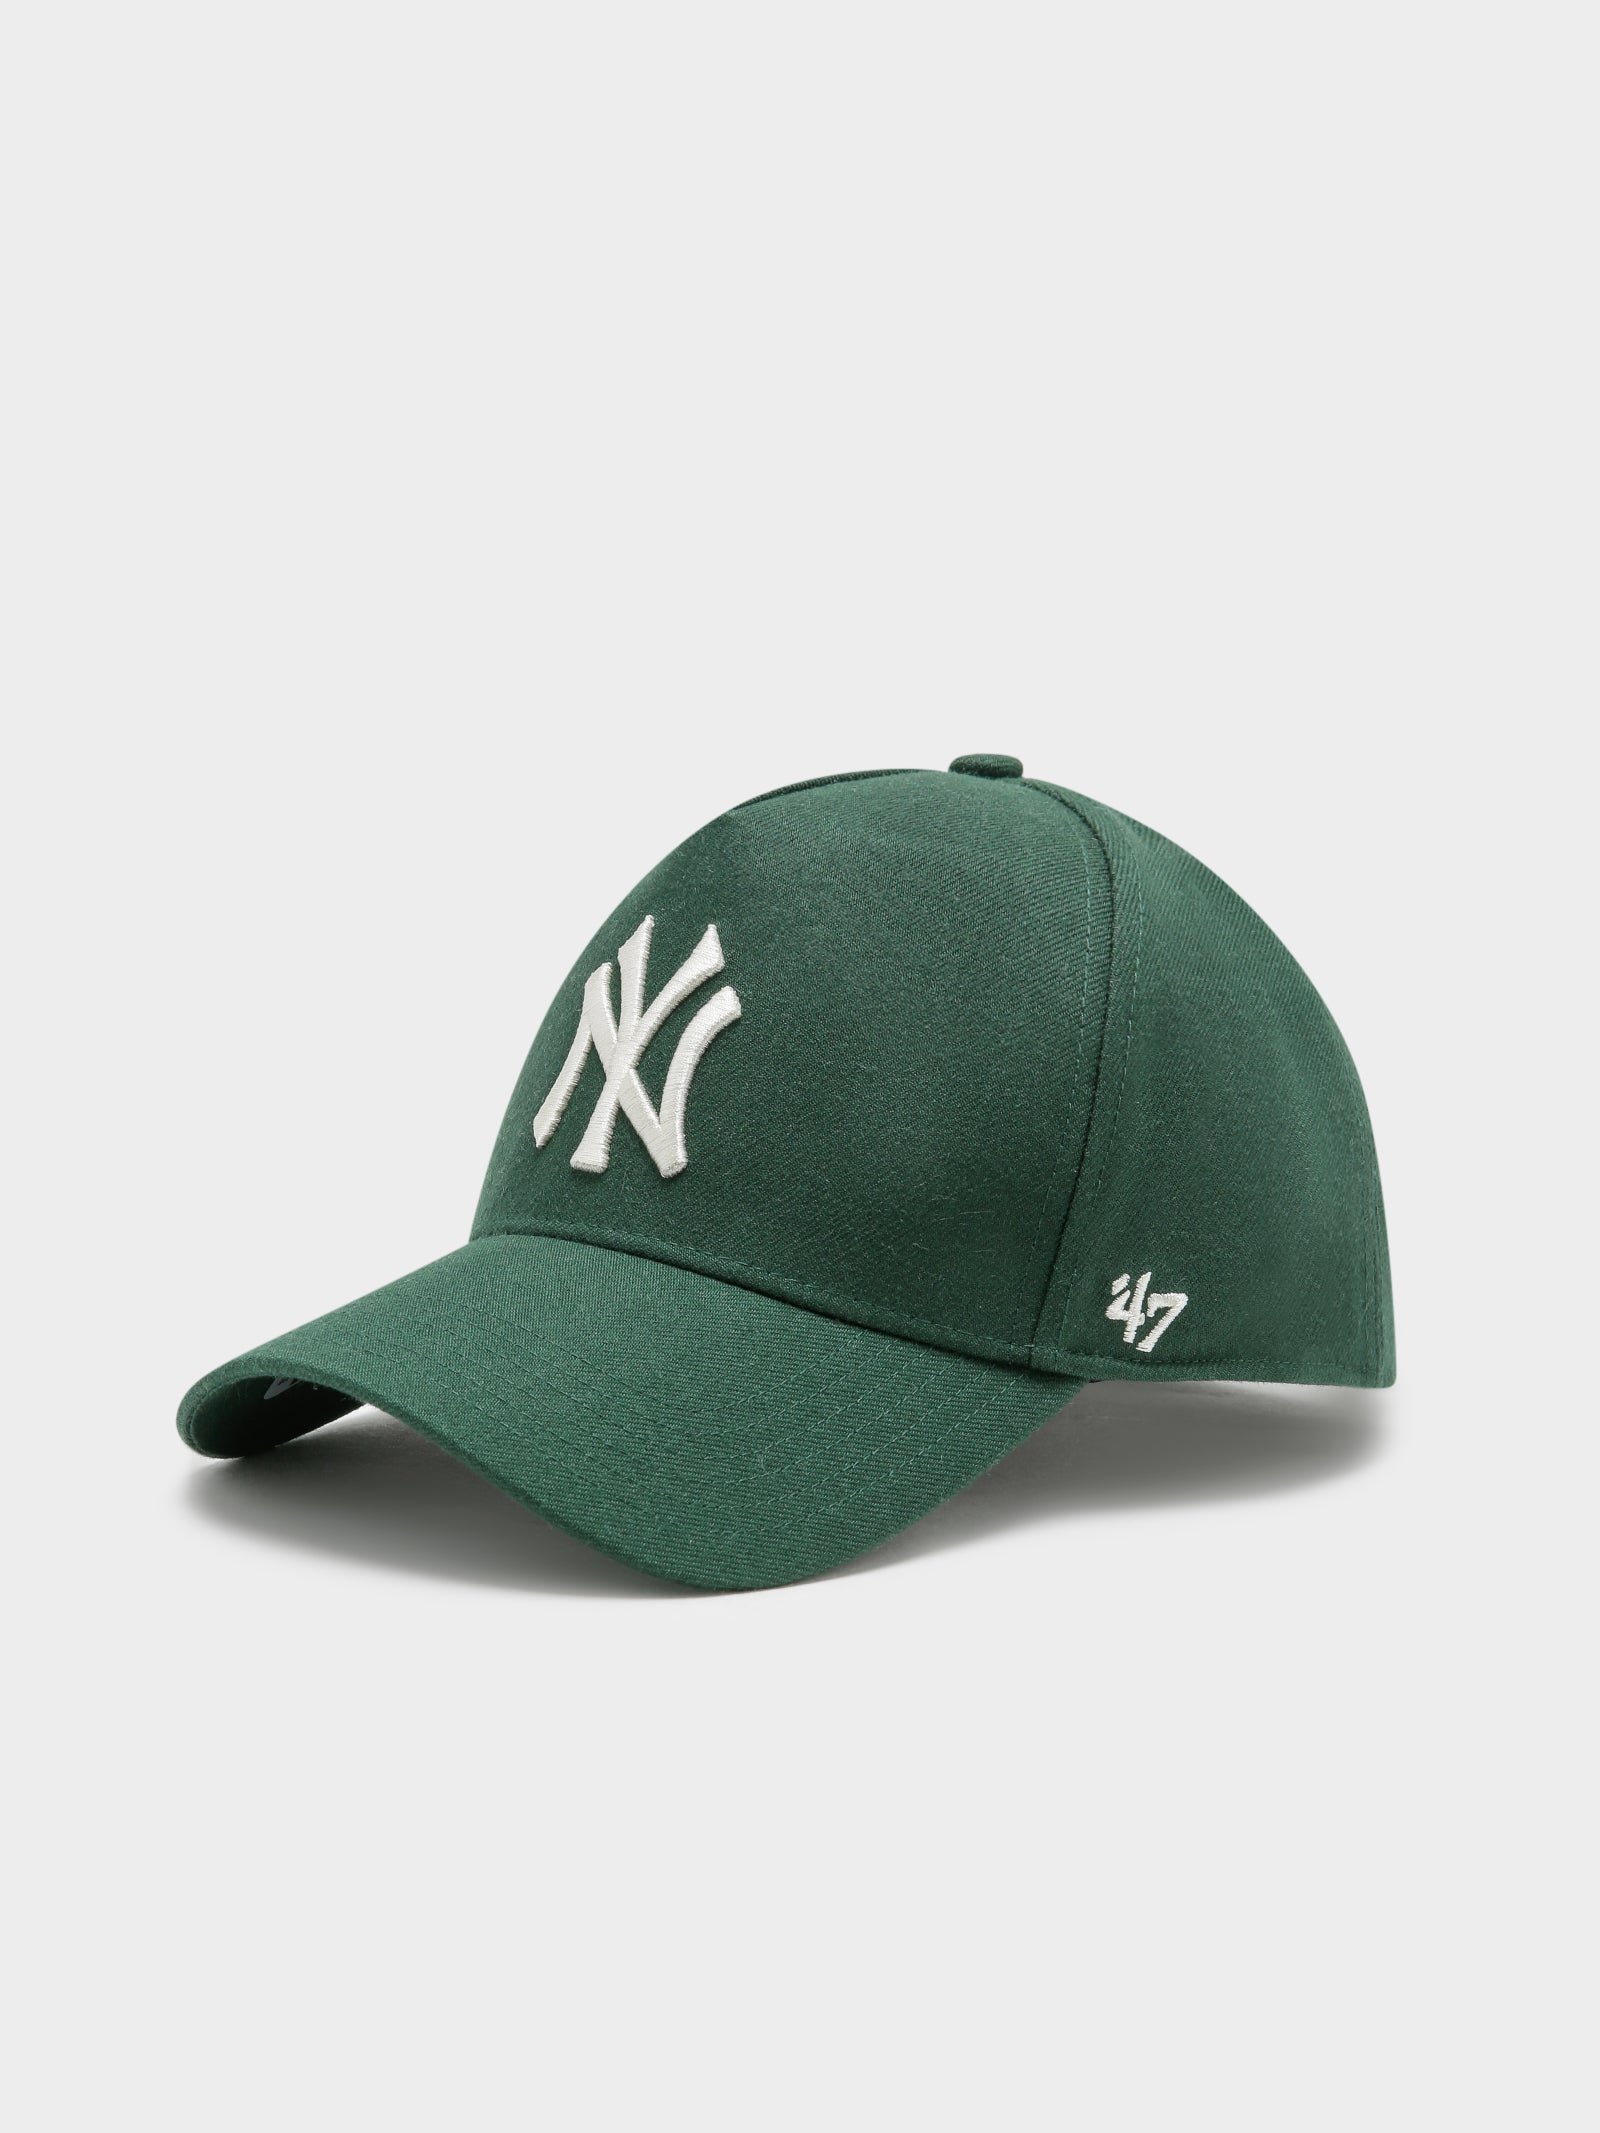 MLB Hats  Caps Australia  Hat Locker